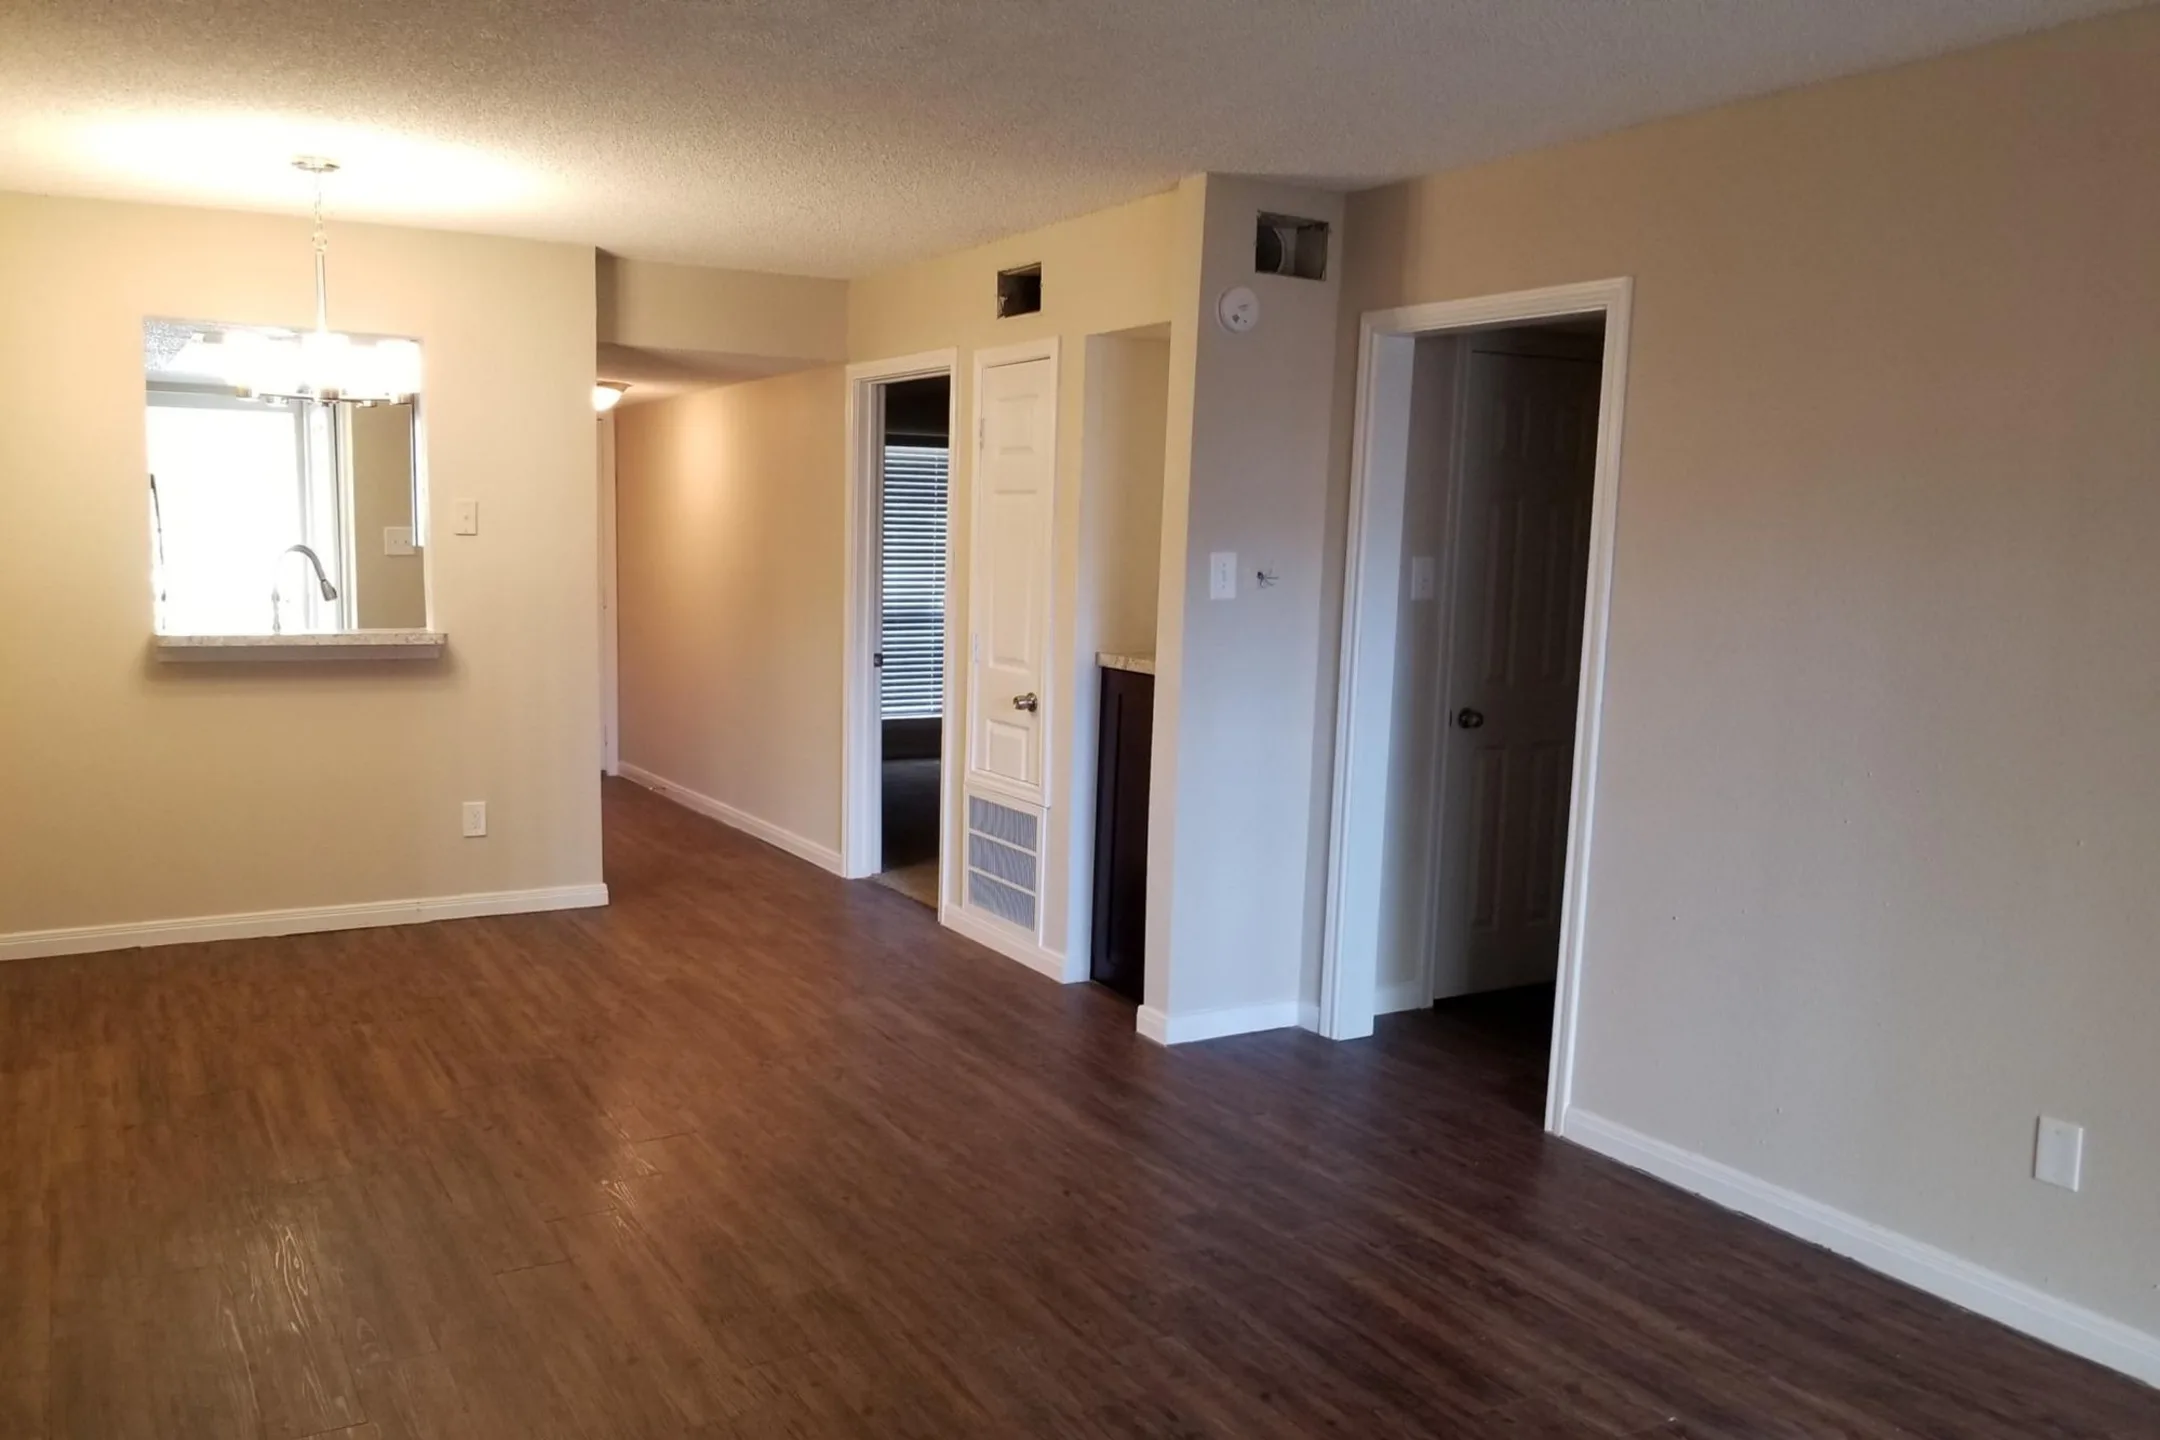 Living Room - Star Braeswood Apartments - Houston, TX